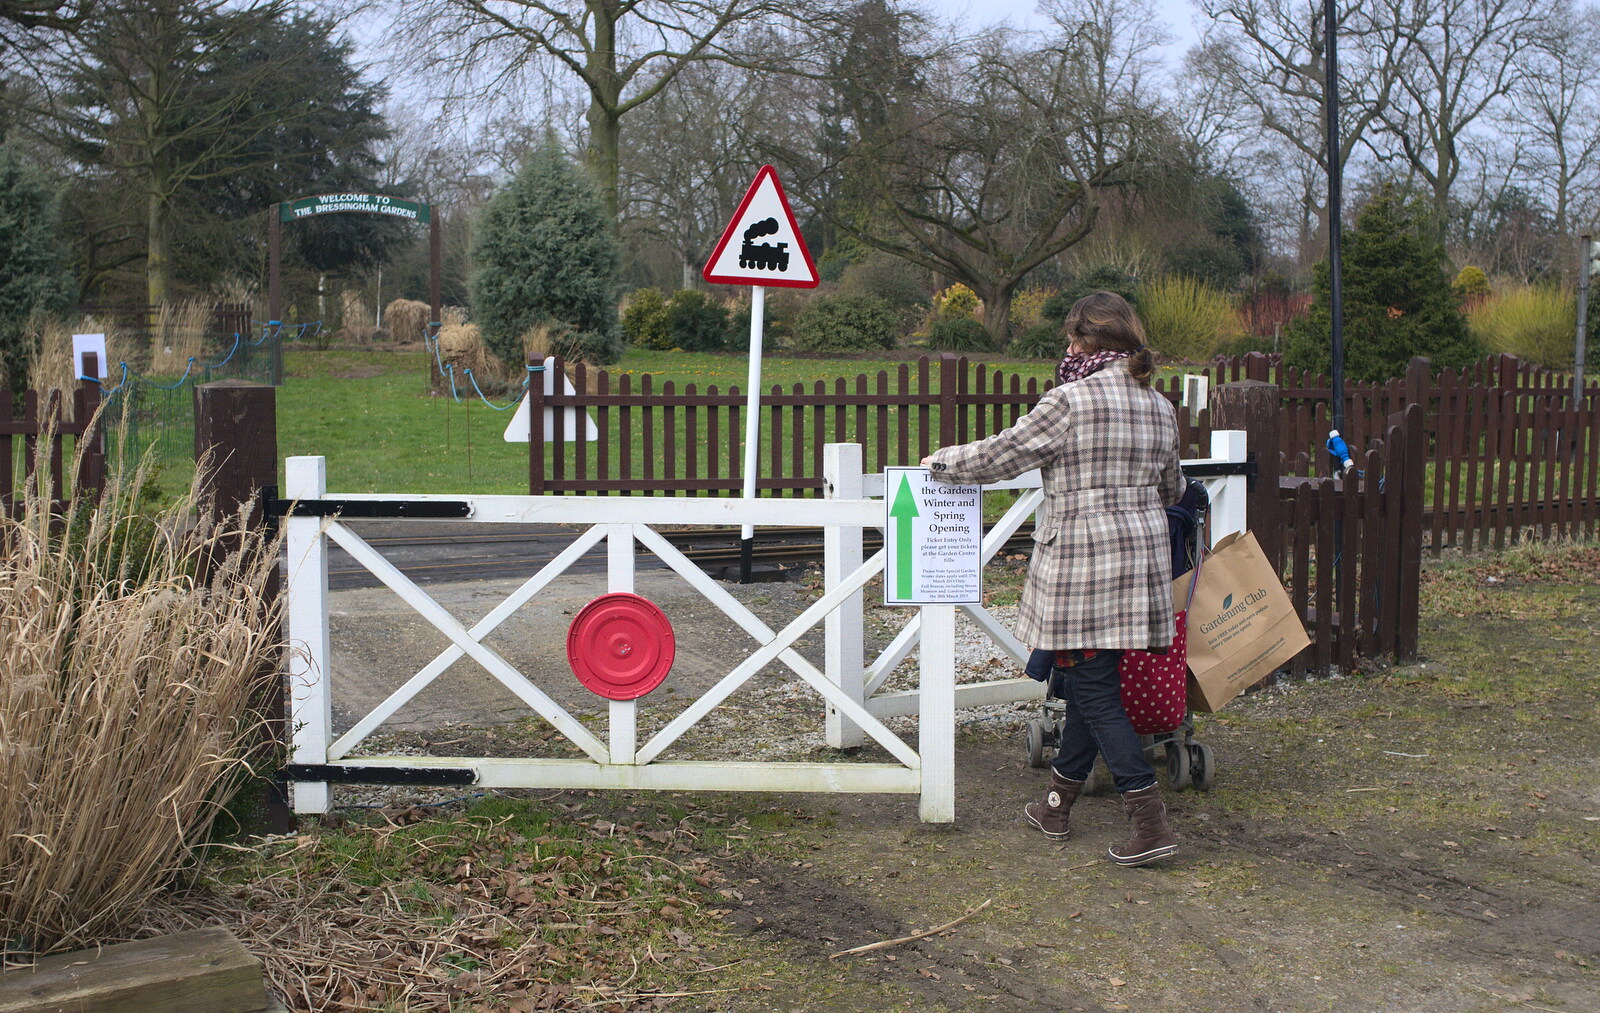 Crossing the railway line from A Walk around Bressingham Winter Garden, Bressingham, Norfolk - 3rd March 2013